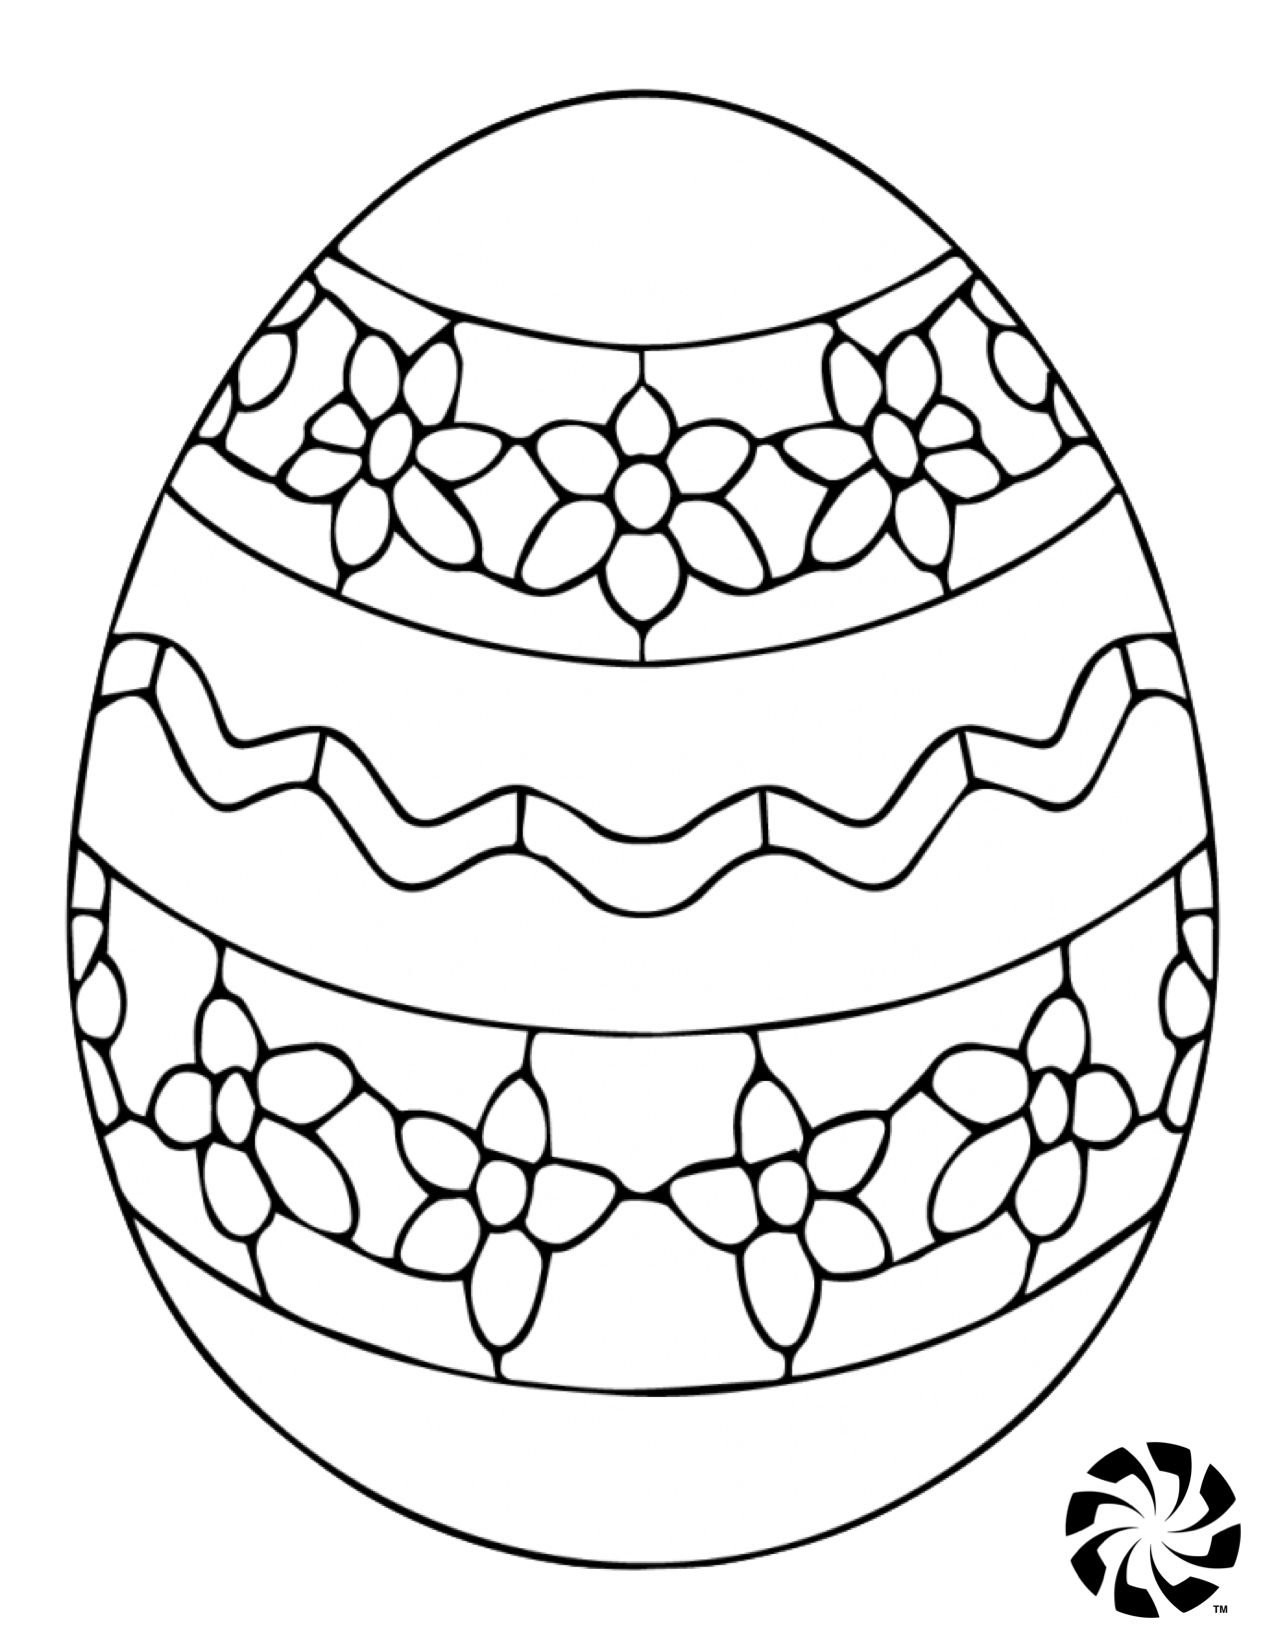 Распечатать раскраску яйца. Пасхальное яйцо раскраска. Пасхальное яйцо раскраска для детей. Раскраски пасочных яиц. Яйца на Пасху раскраска.